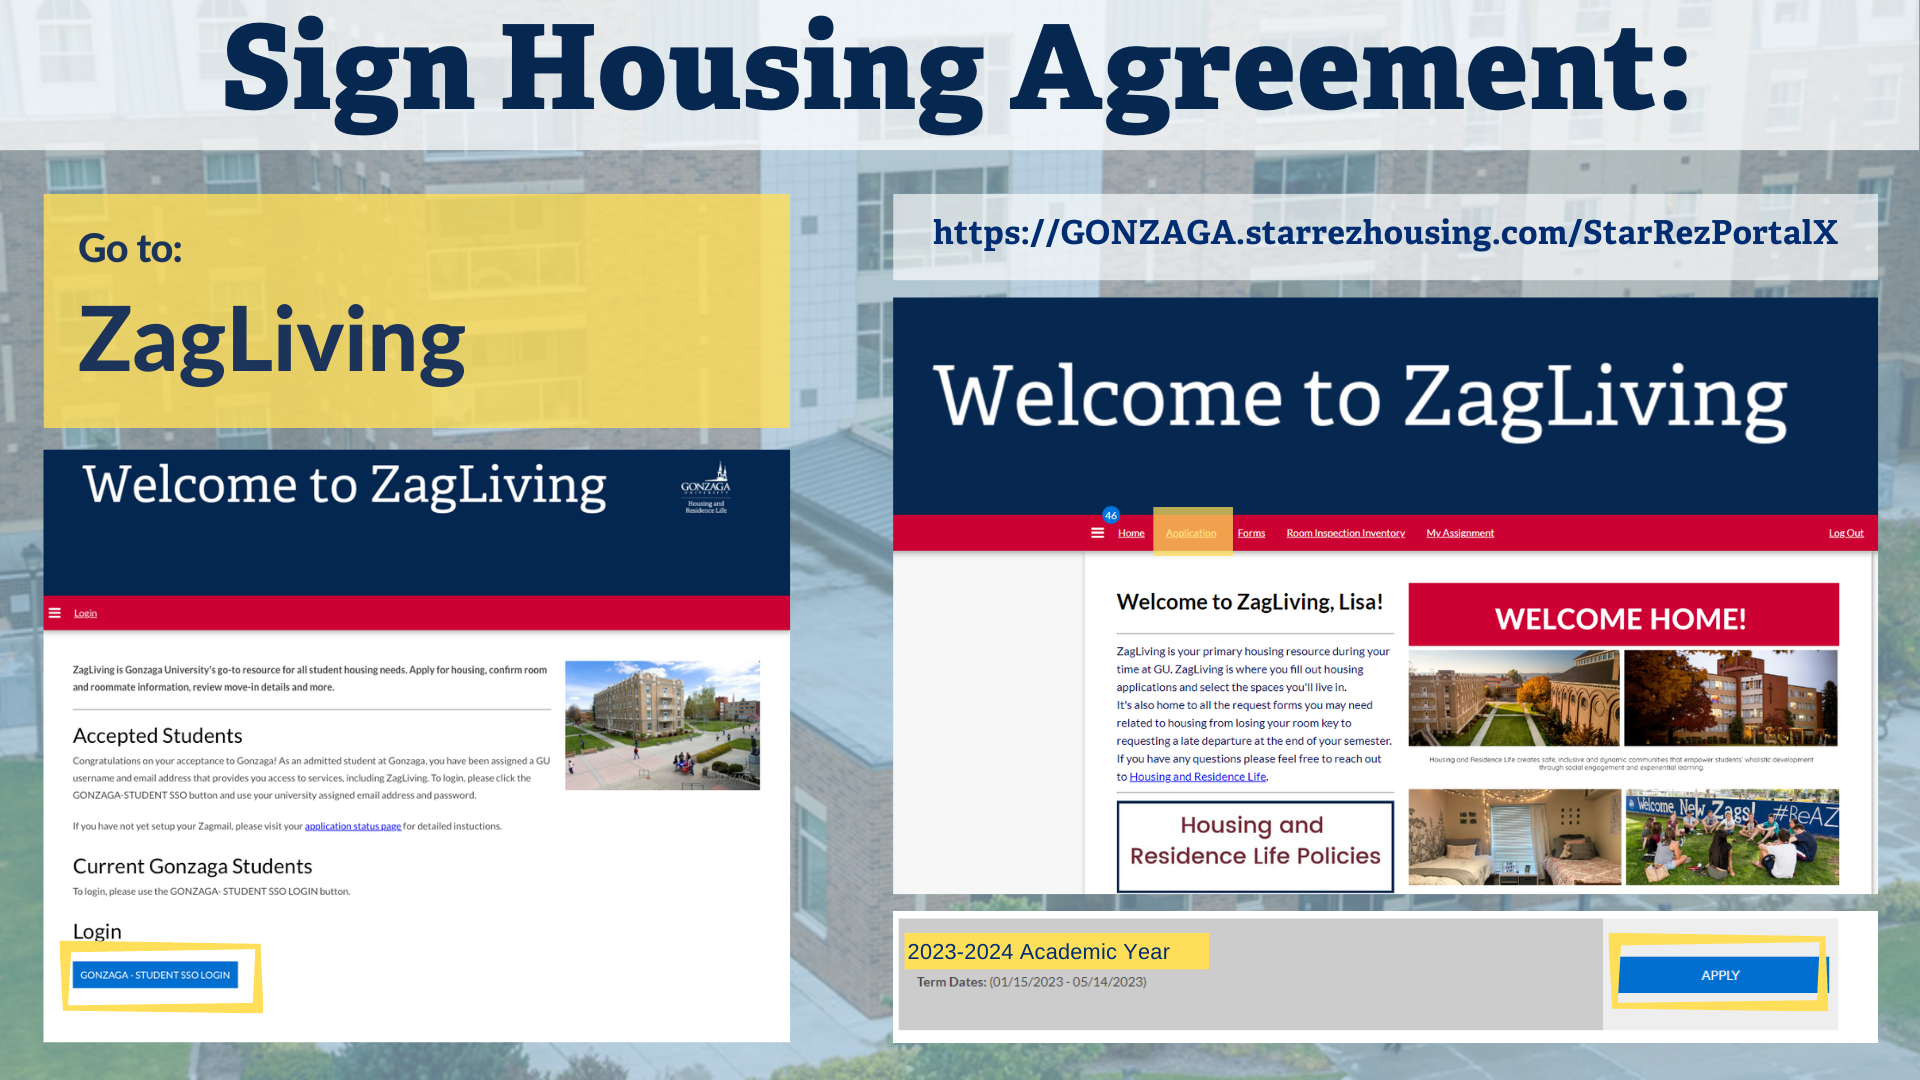 GON Housing Agreement